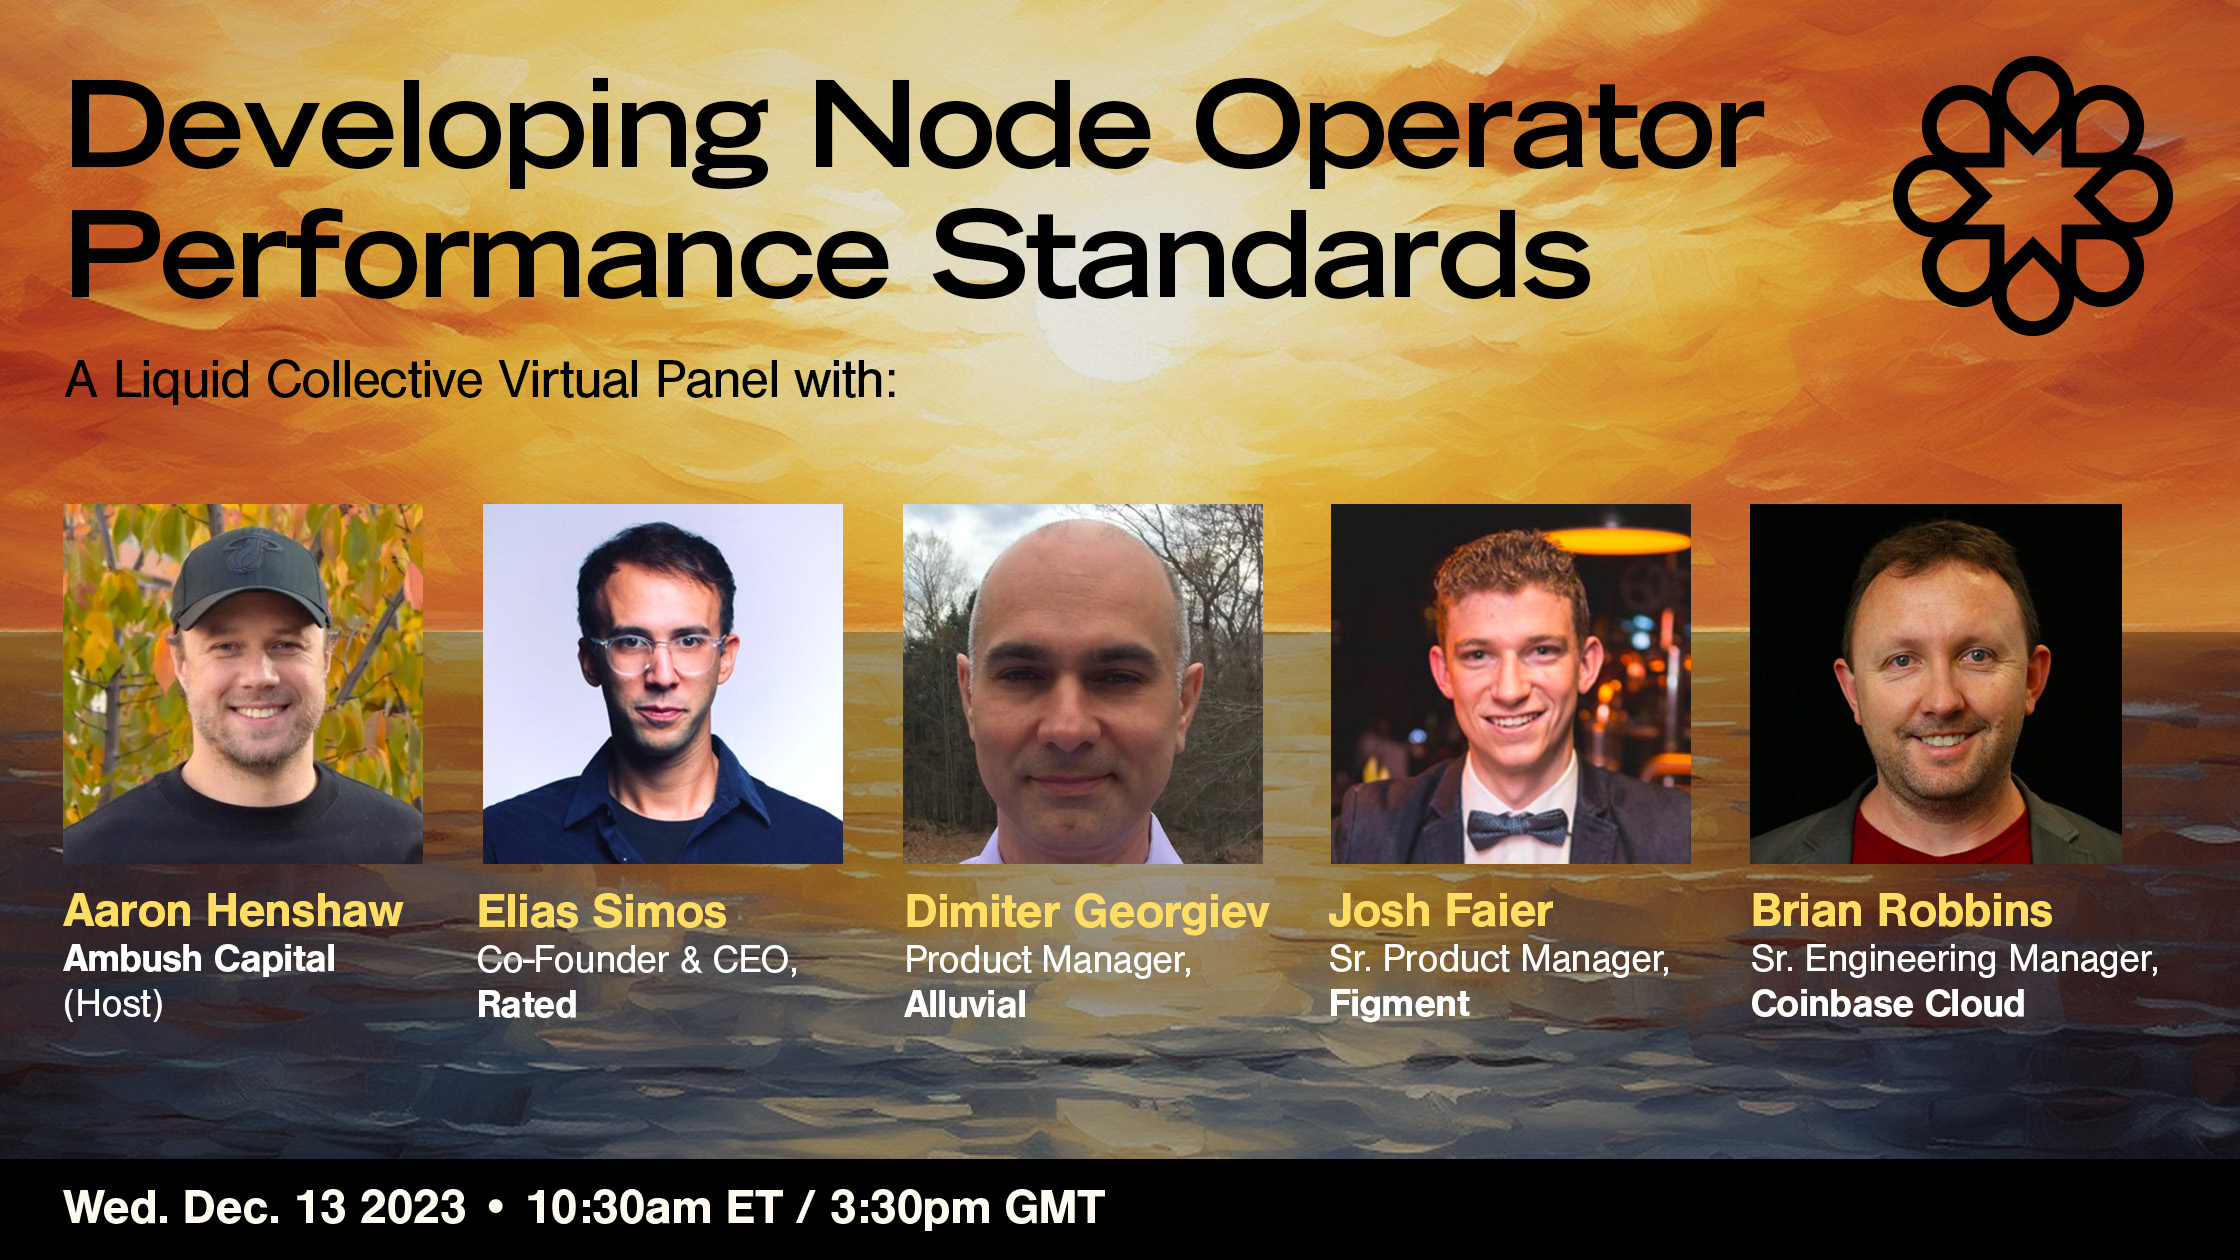 Event: “Developing Node Operator Performance Standards”